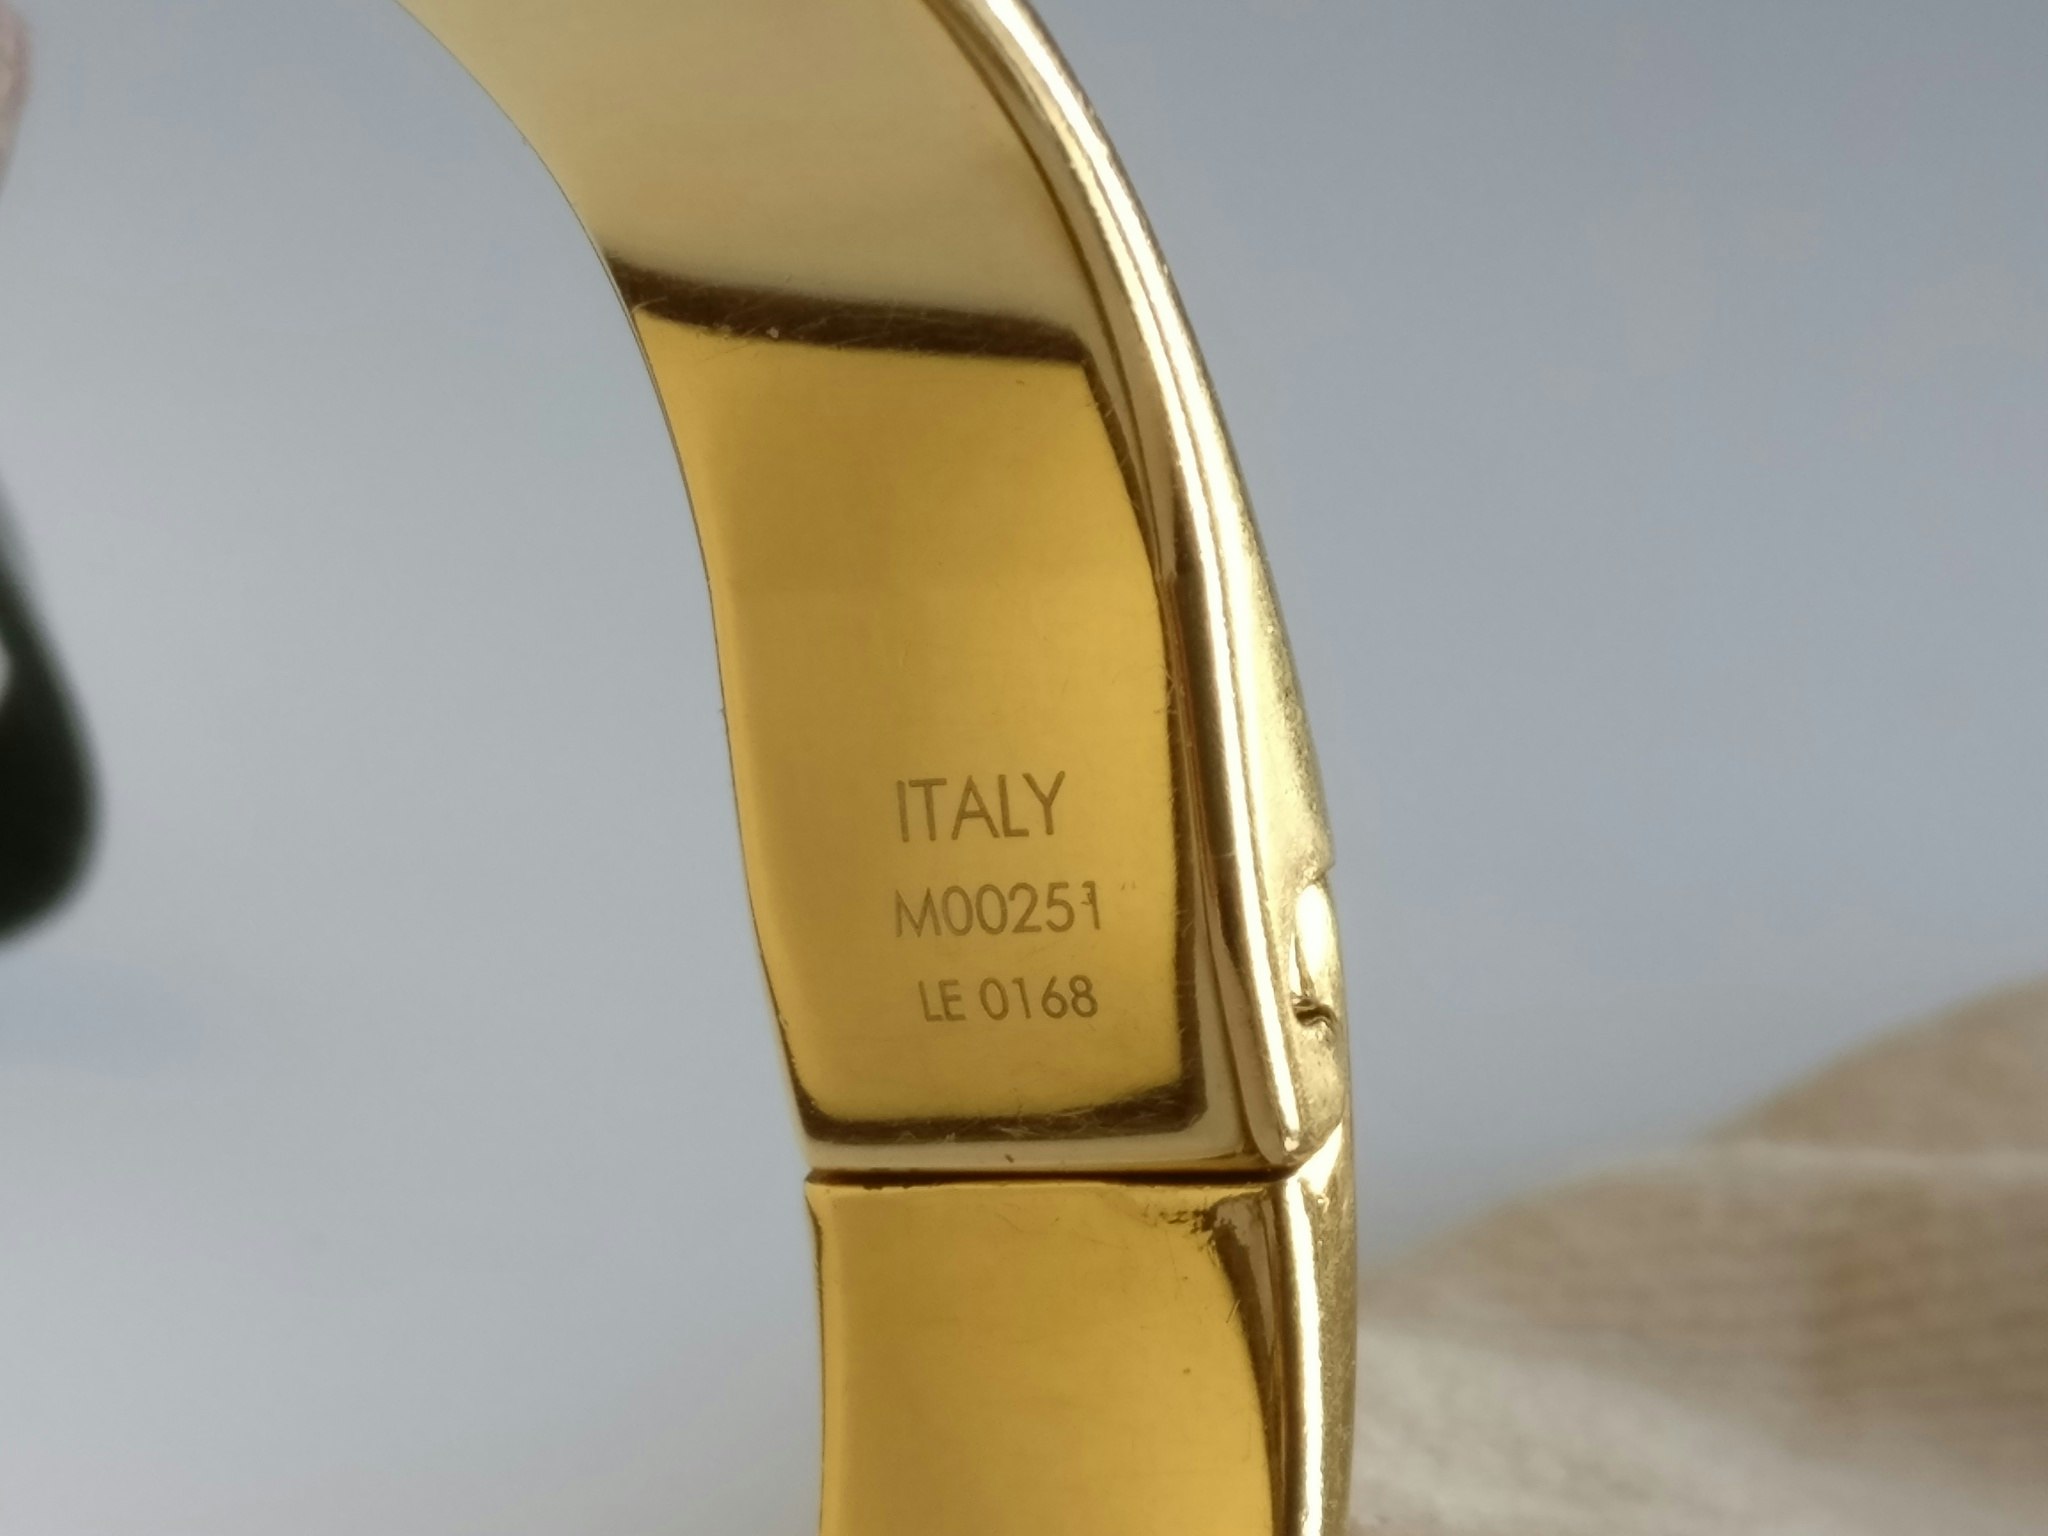 Louis Vuitton Nanogram cuff bracelet